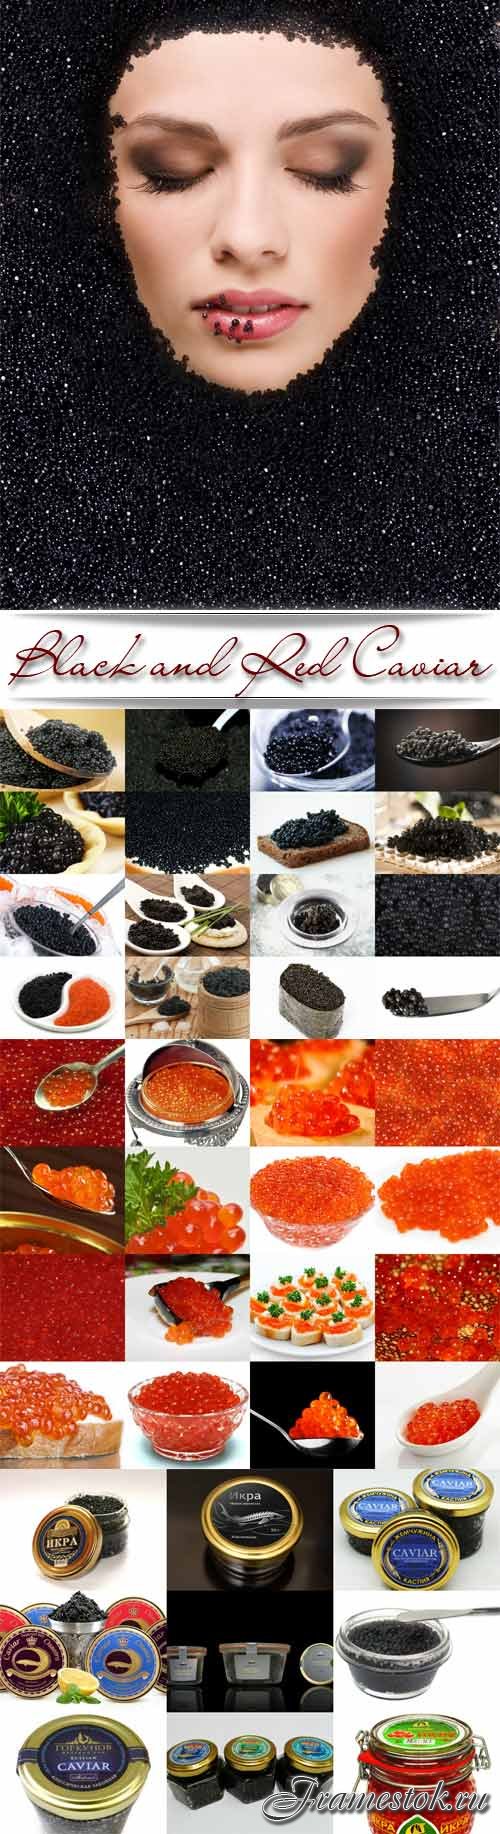 Black and Red Caviar raster graphics